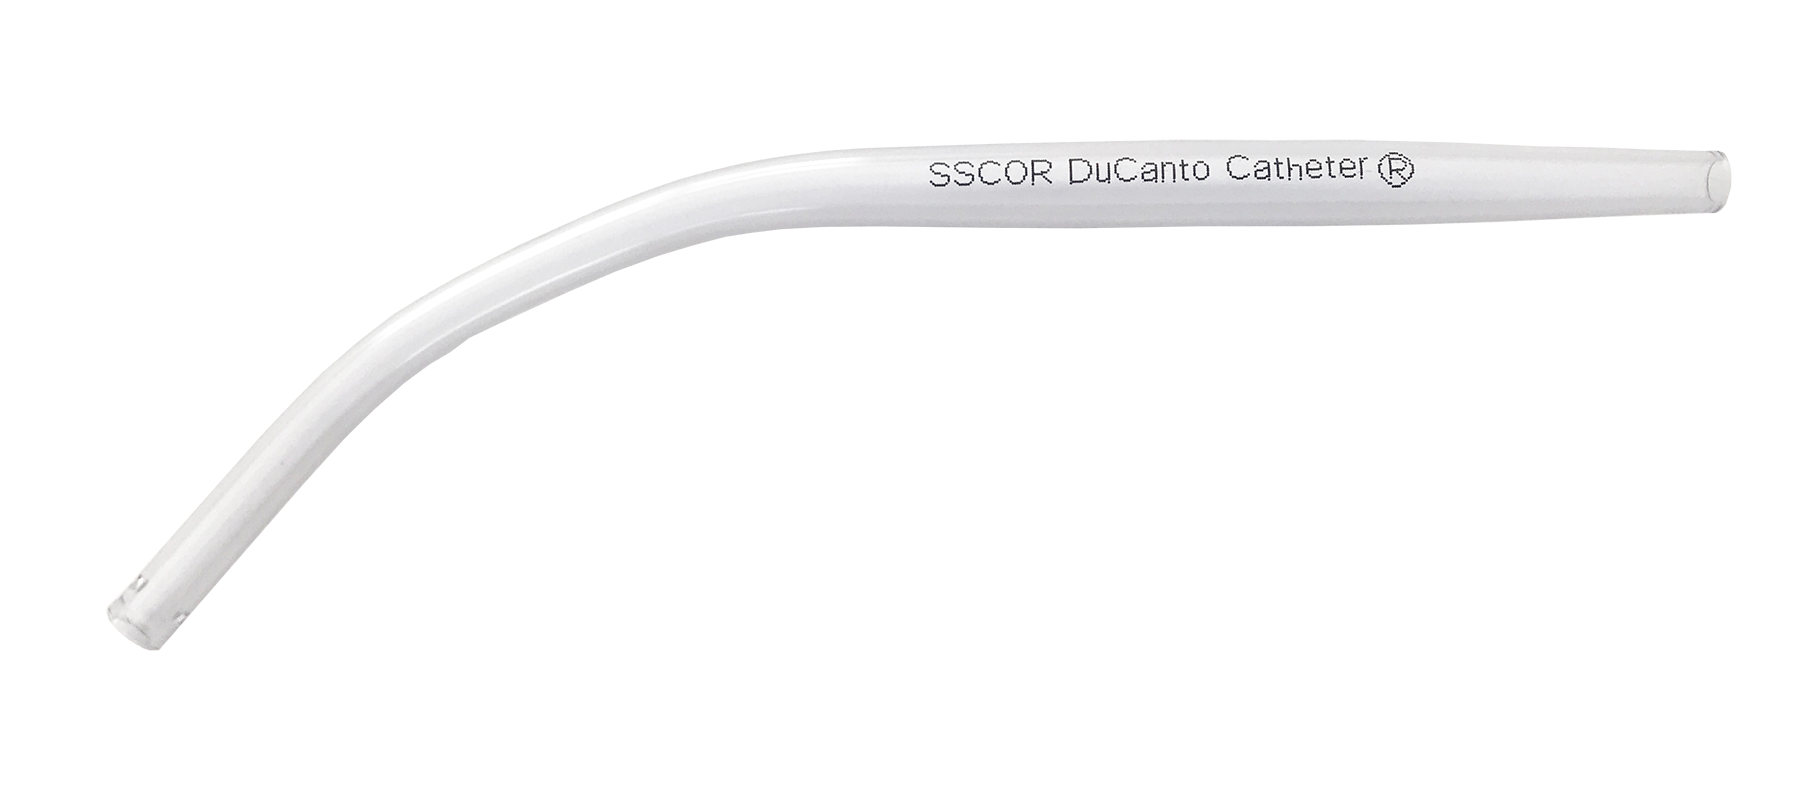 SSCOR Ducanto Catheter